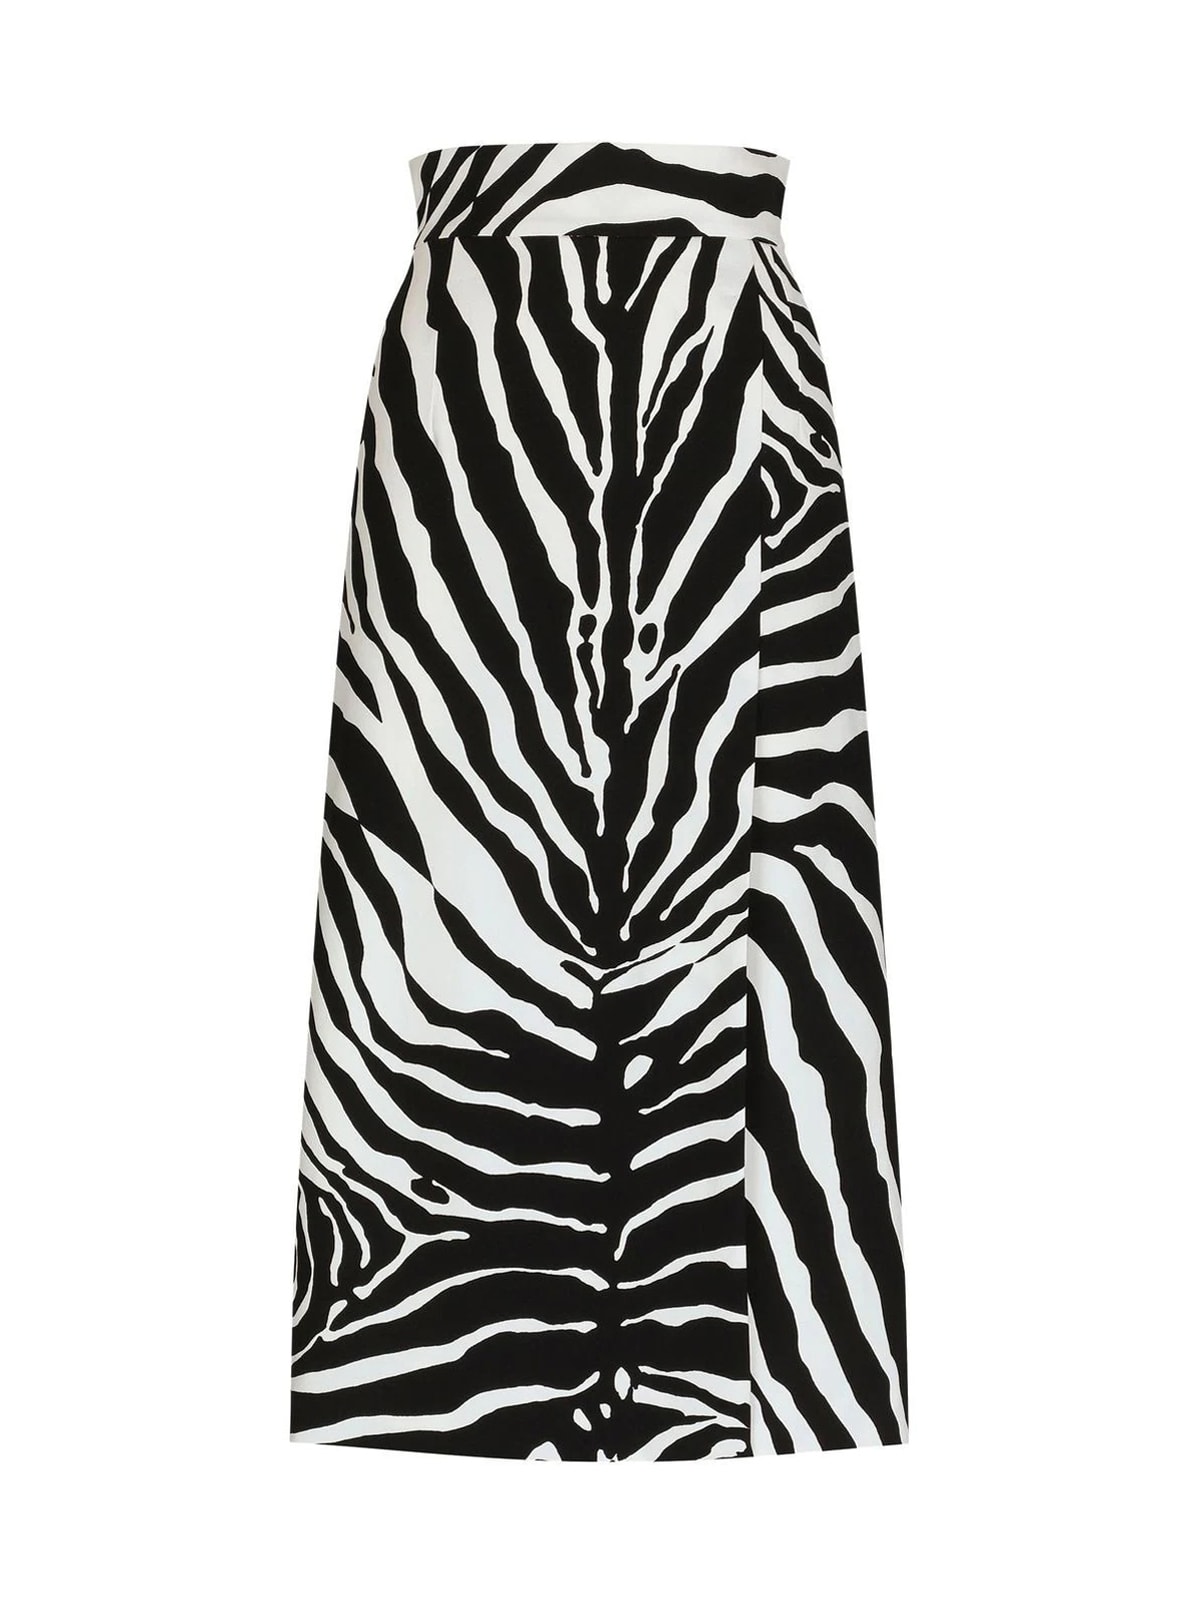 Dolce & Gabbana Zebra Skirt